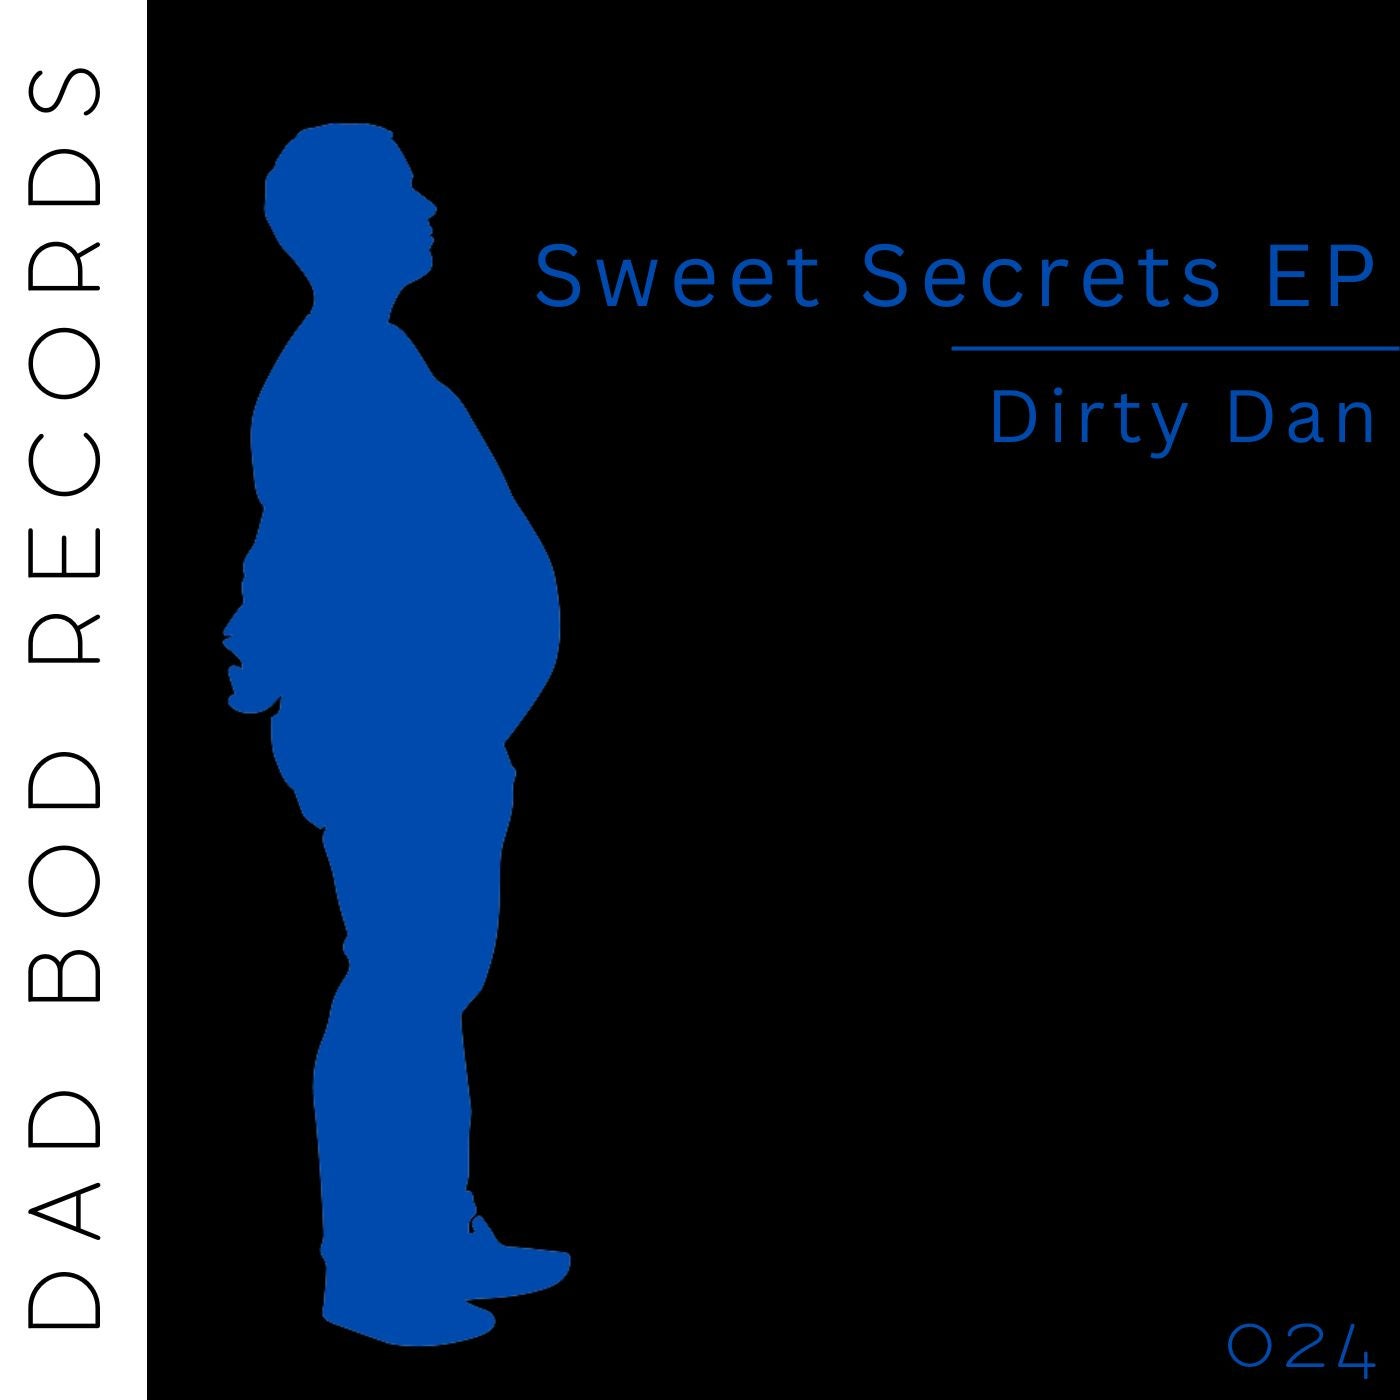 Sweet Secrets EP